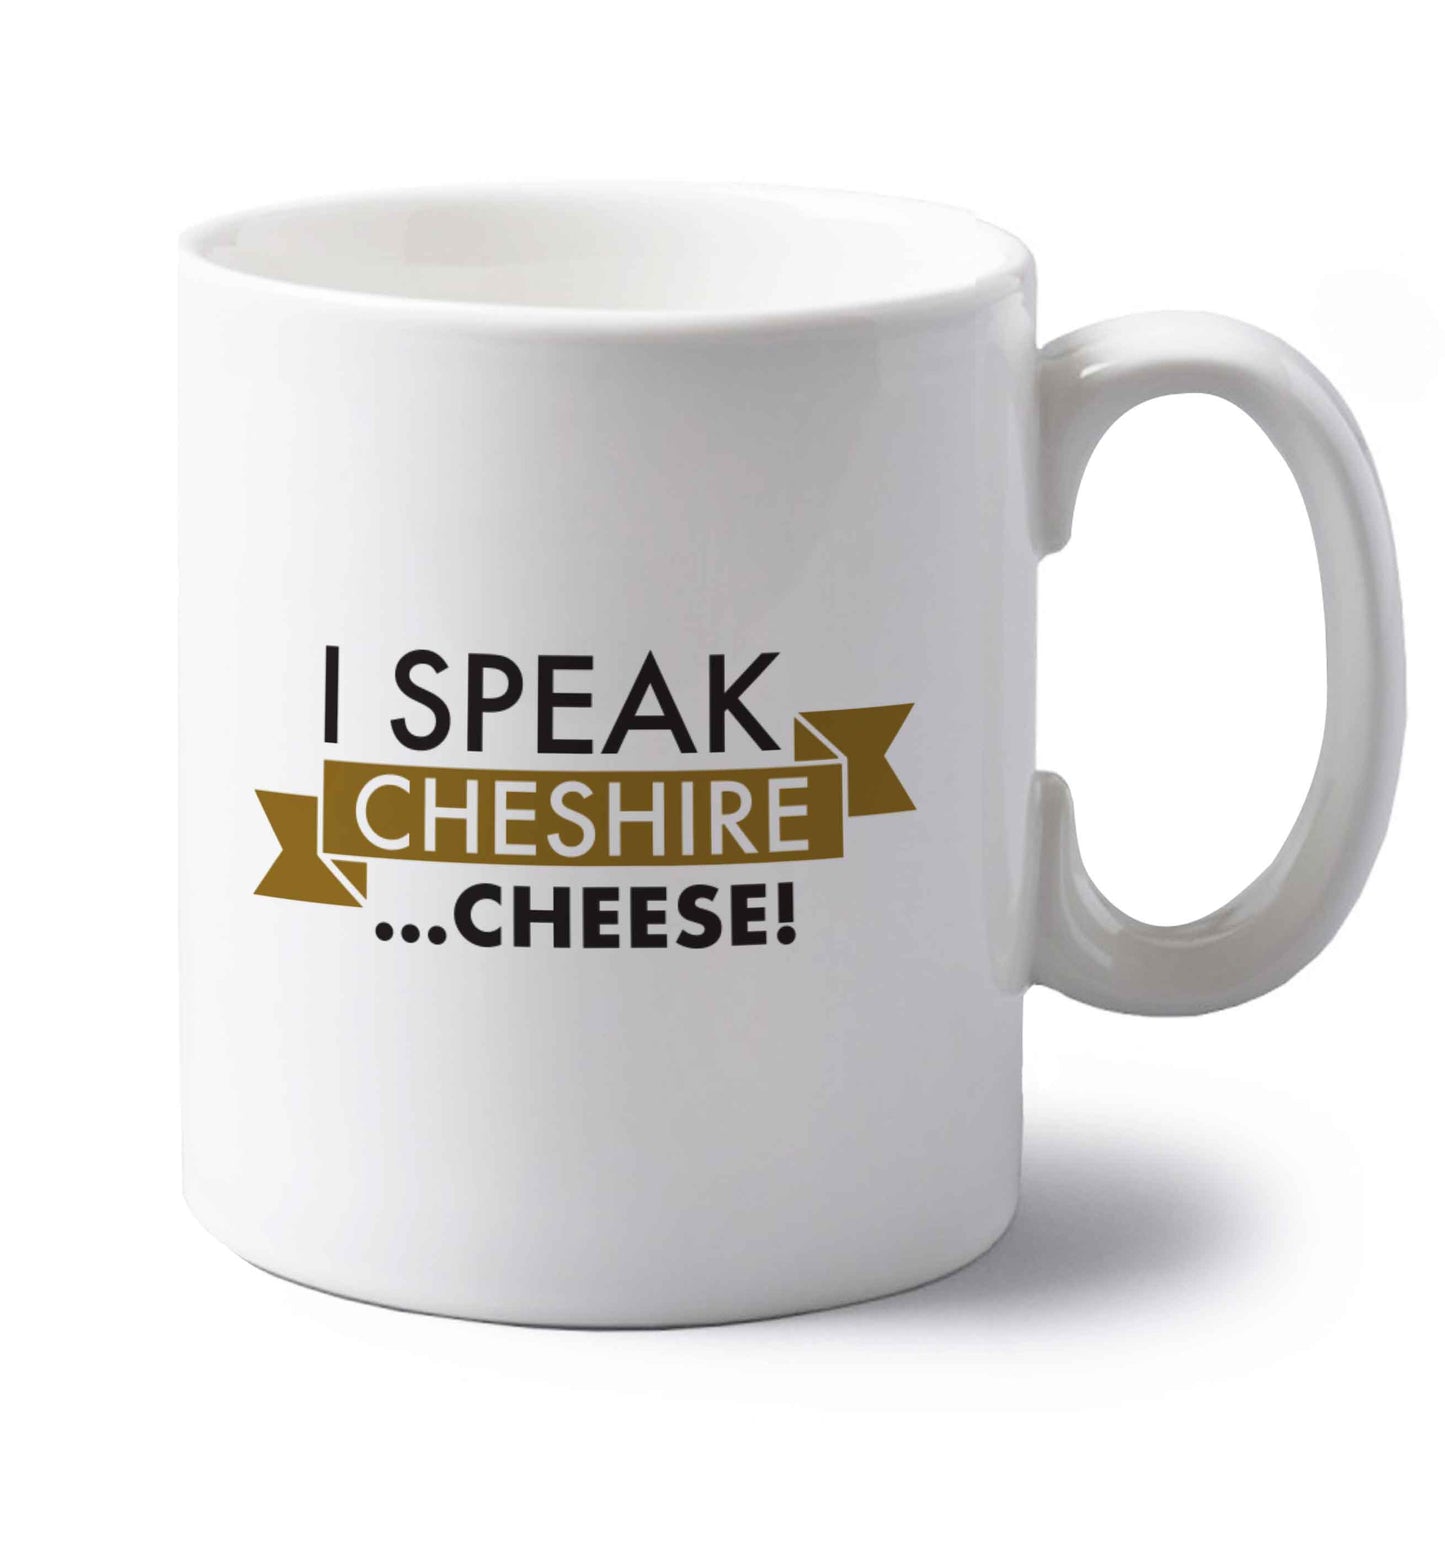 I speak Cheshire cheese left handed white ceramic mug 